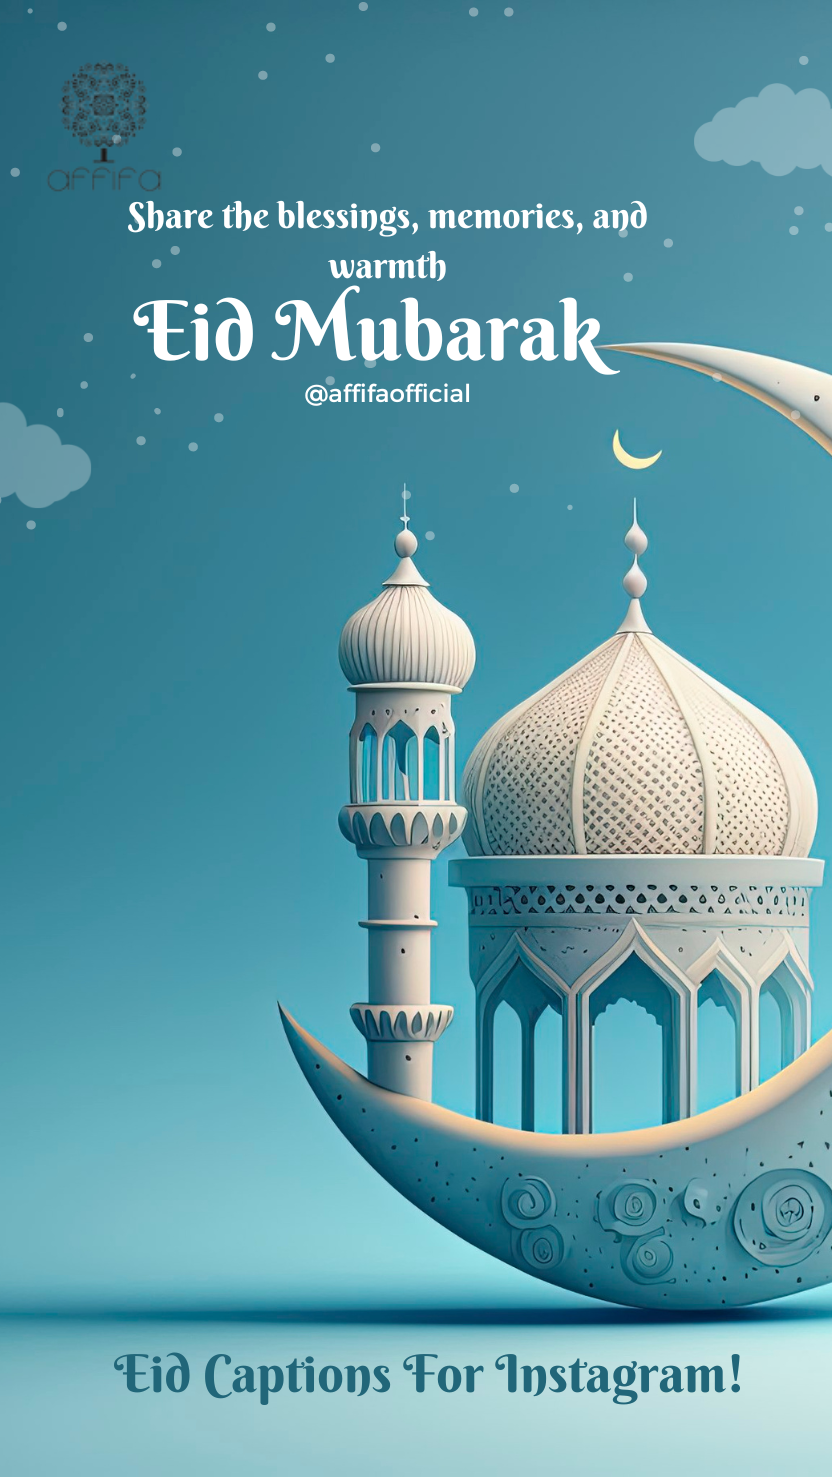 Eid Mubarak captions